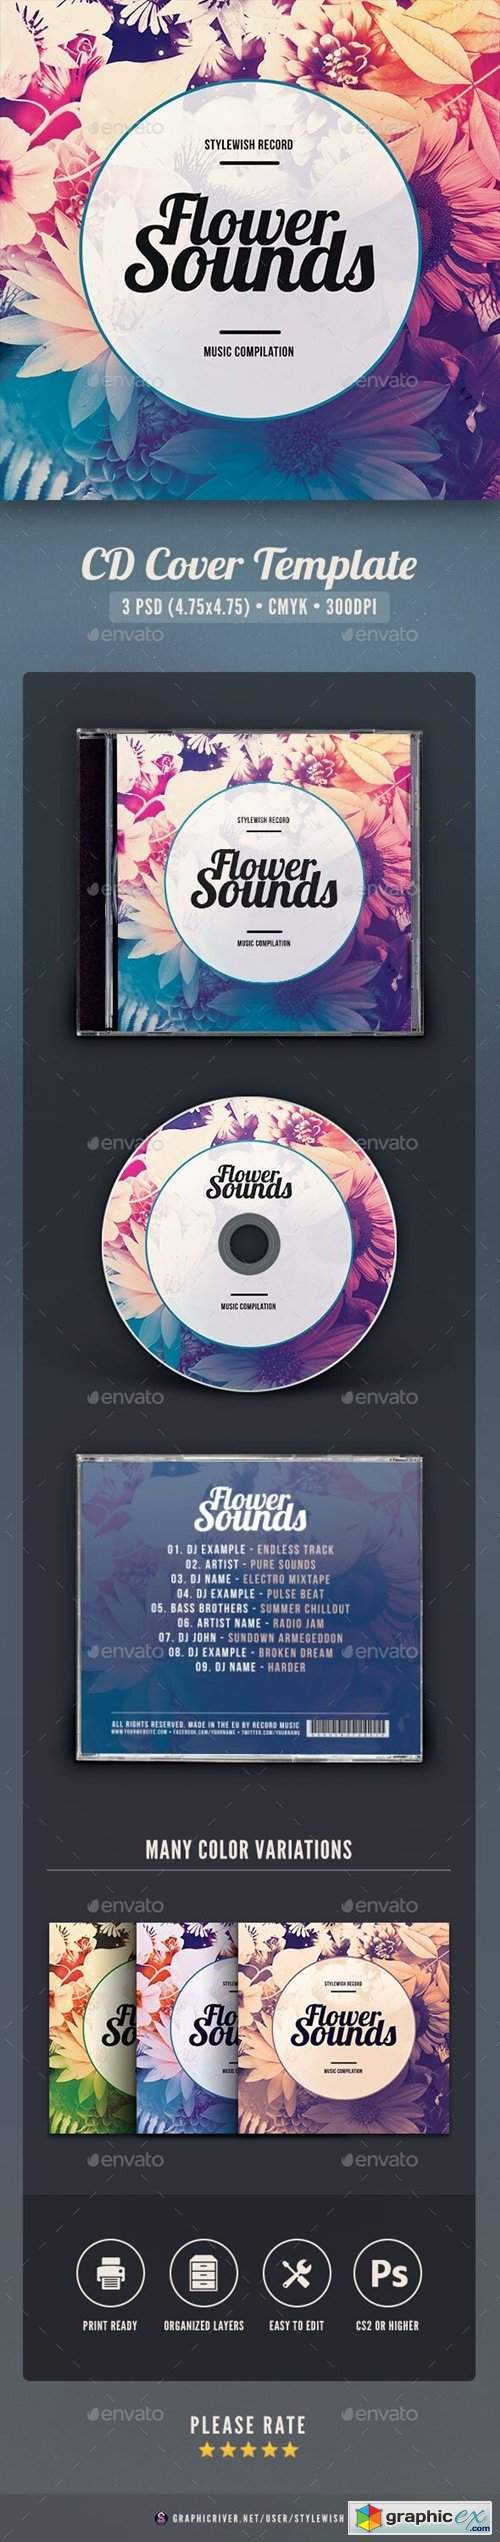 Flower Sounds CD Cover Artwork